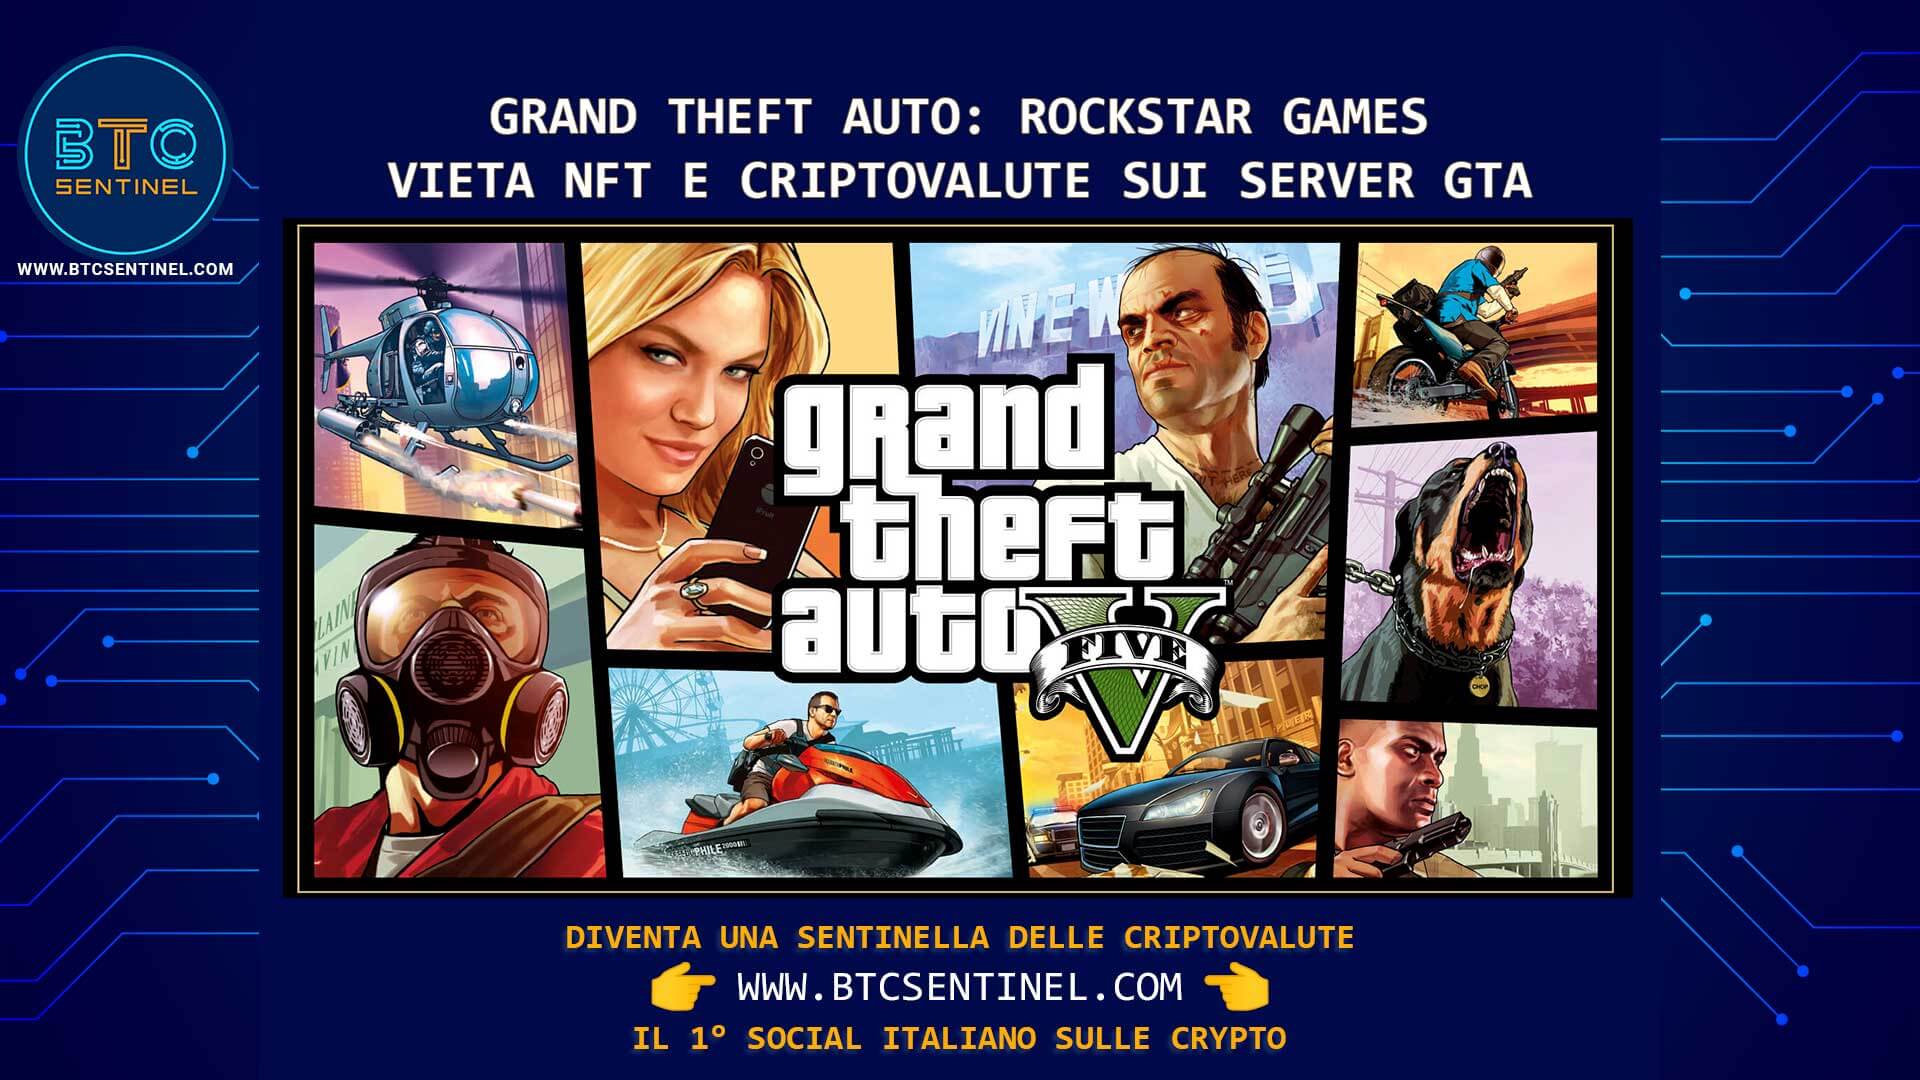 Grand Theft Auto: Rockstar Games vieta NFT e criptovalute sui server GTA